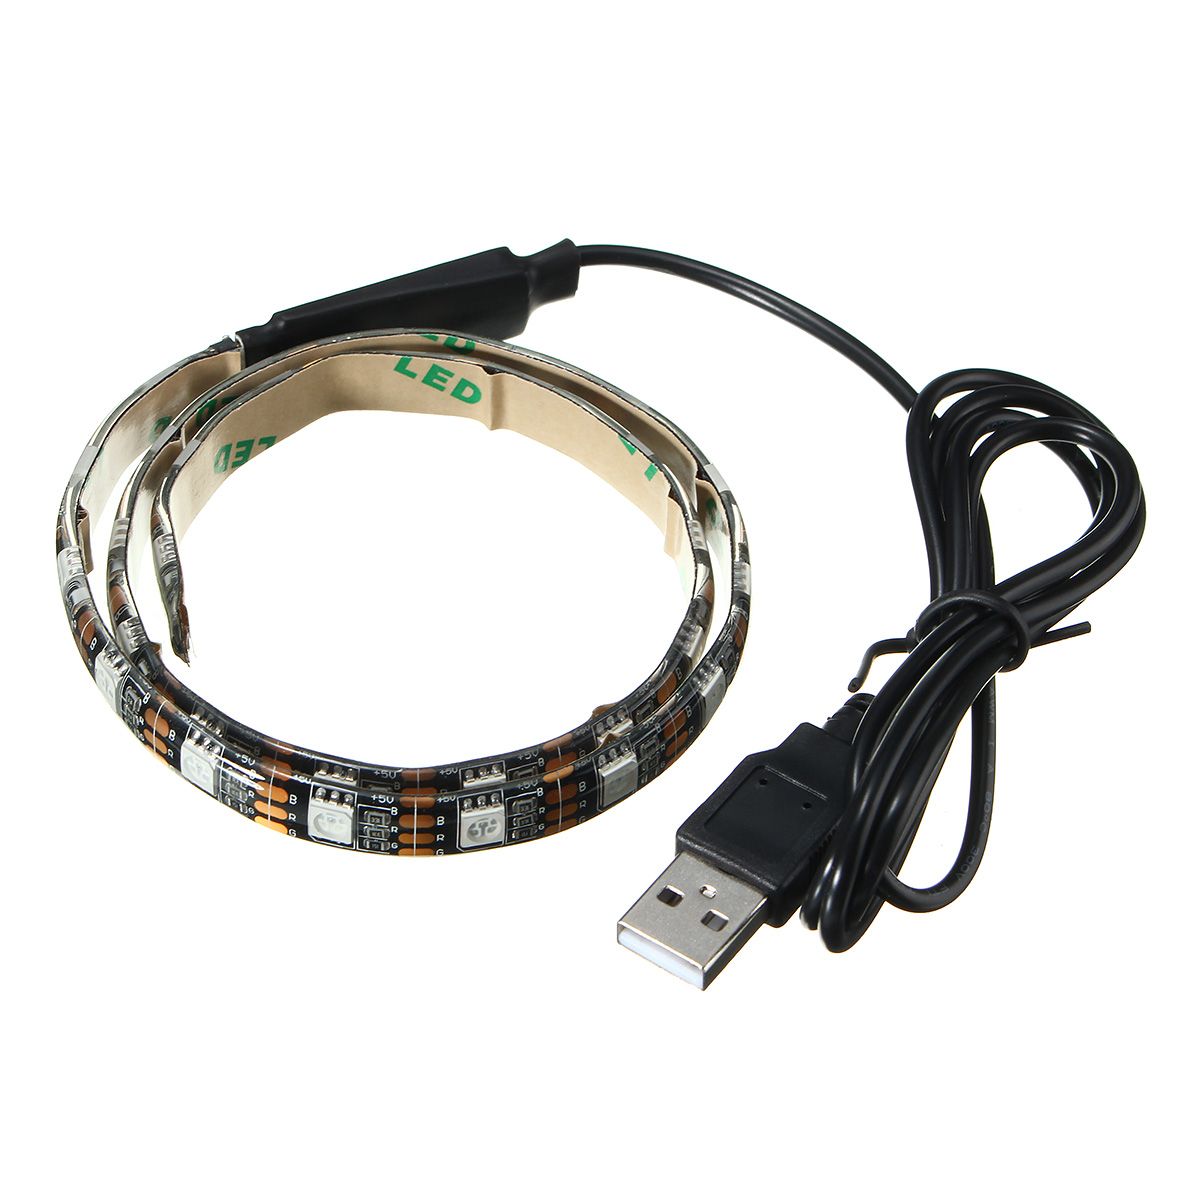 Waterproof-5050-USB-Black-TV-PC-Background-RGB-LED-Strip-Light-Xmas-Decor-Remote-DC5V-1094959